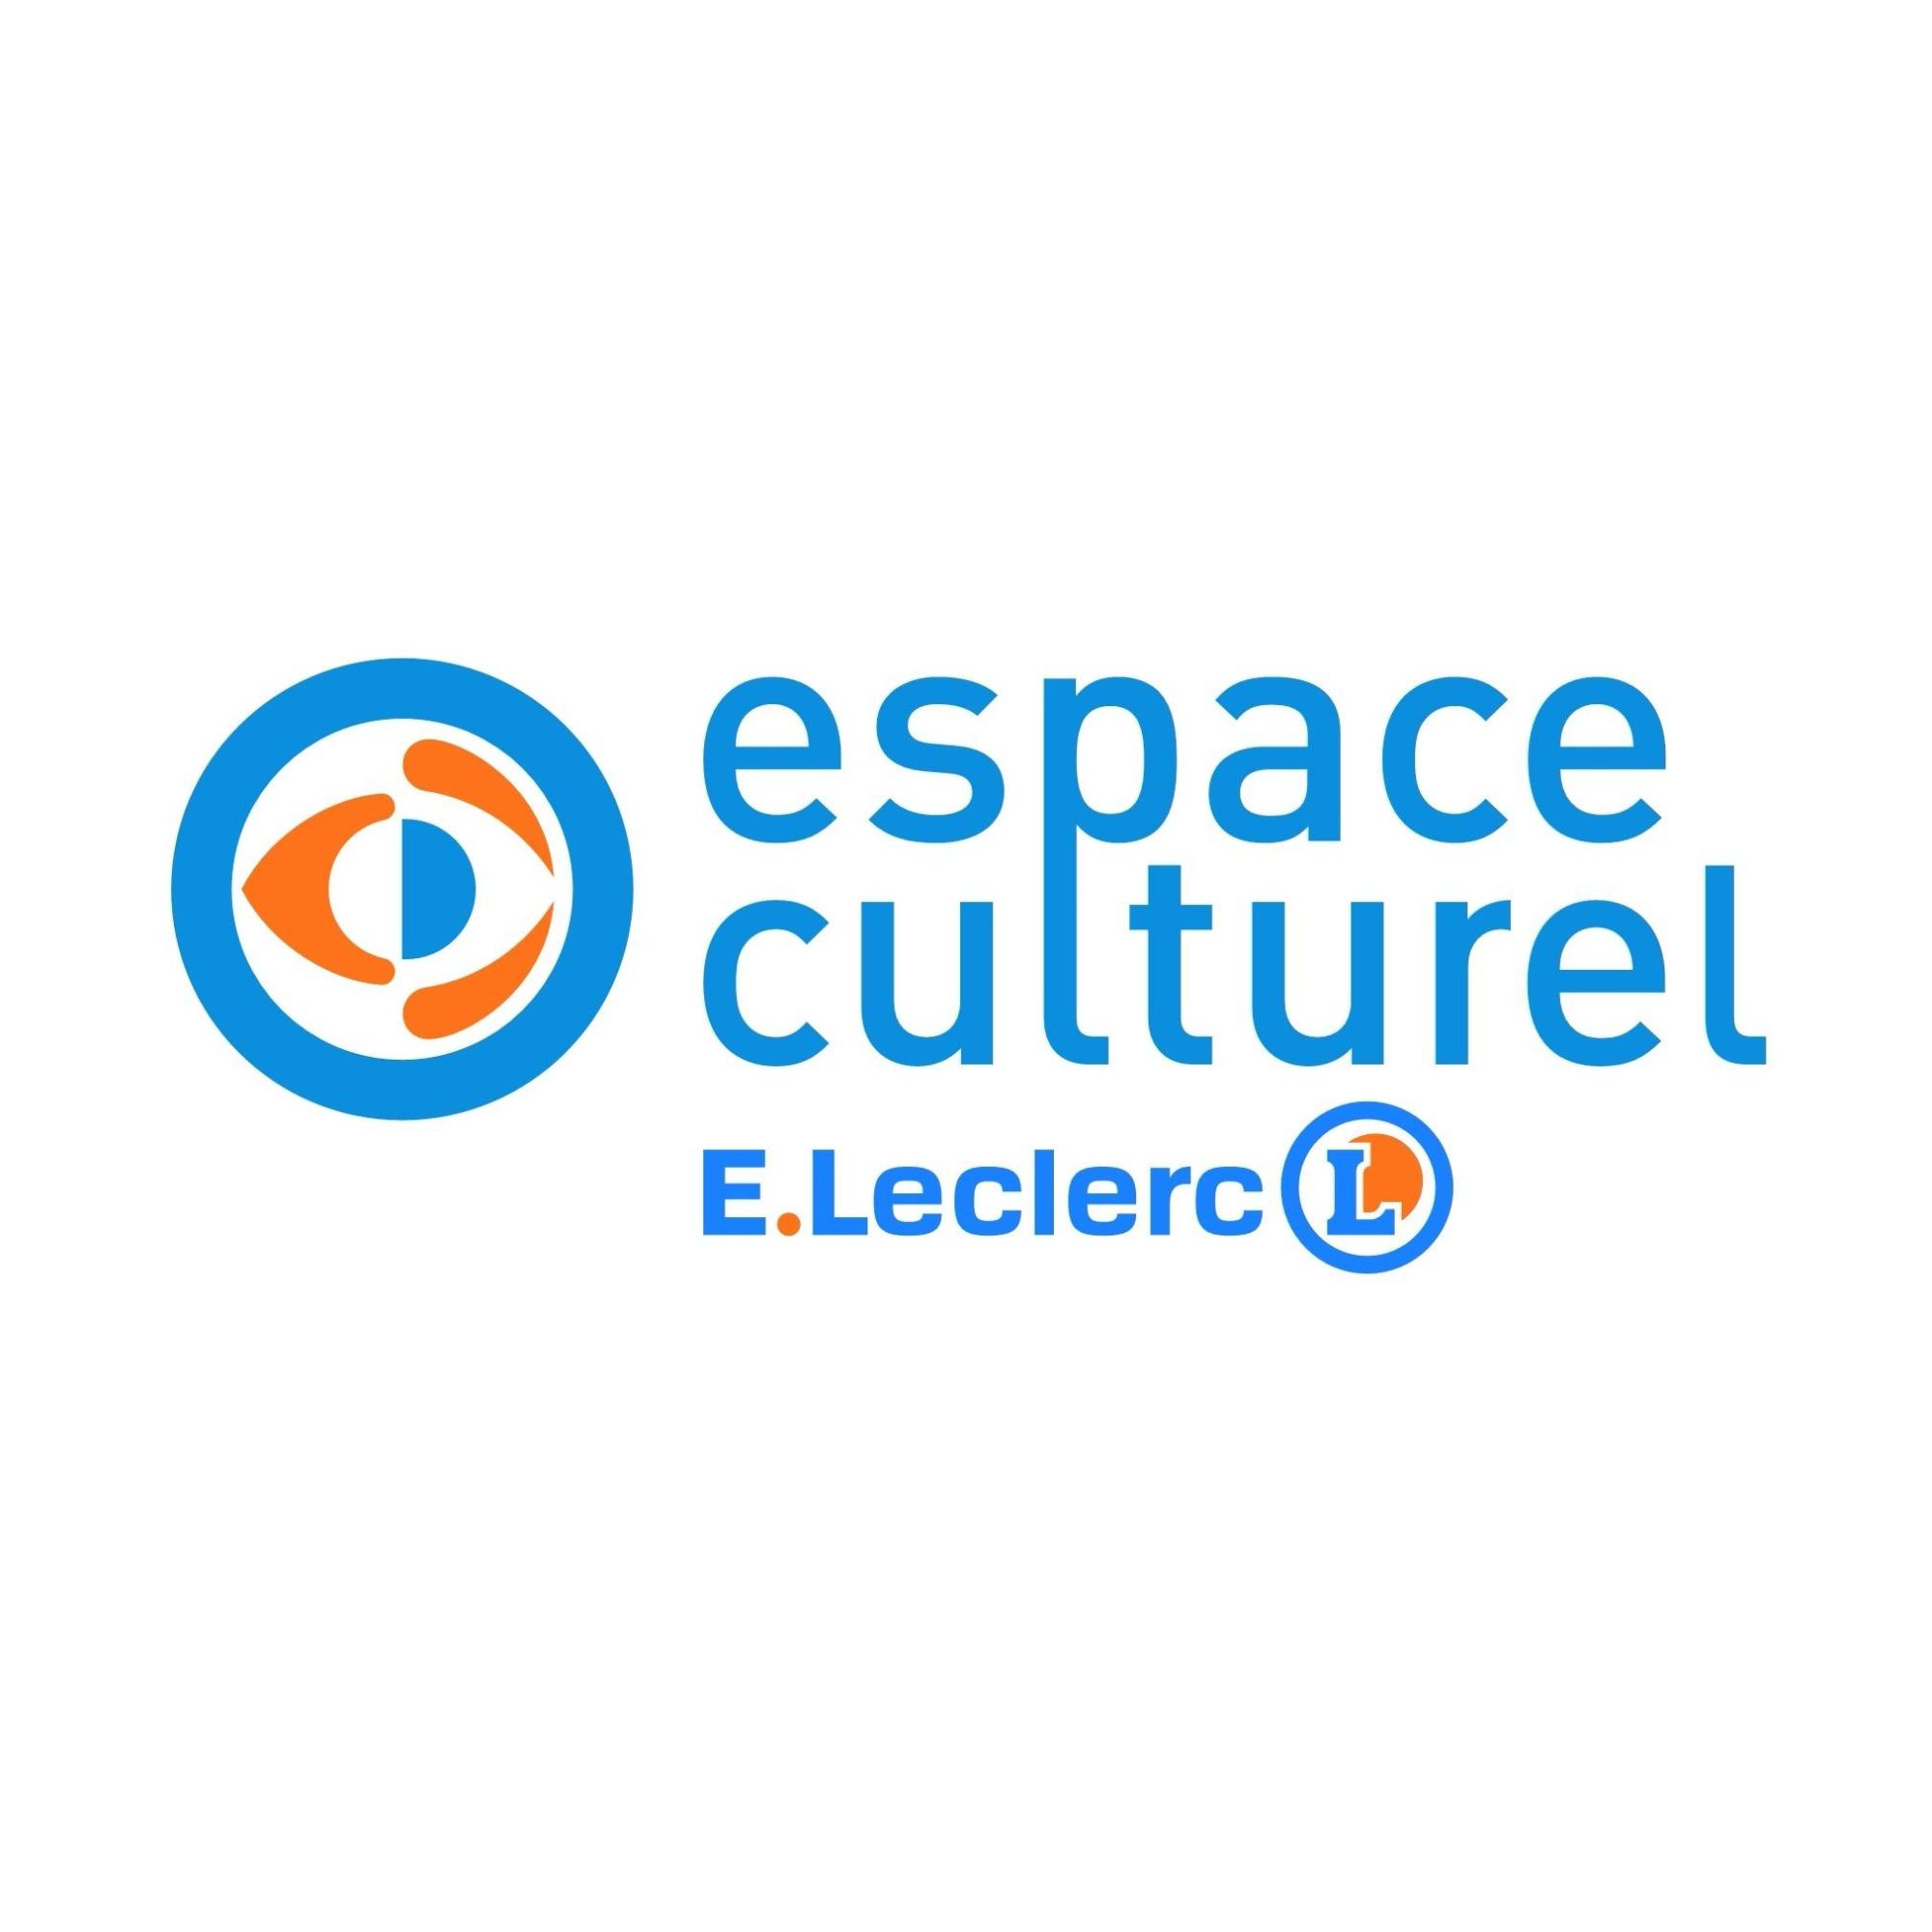 E.leclerc Espace Culturel Clichy